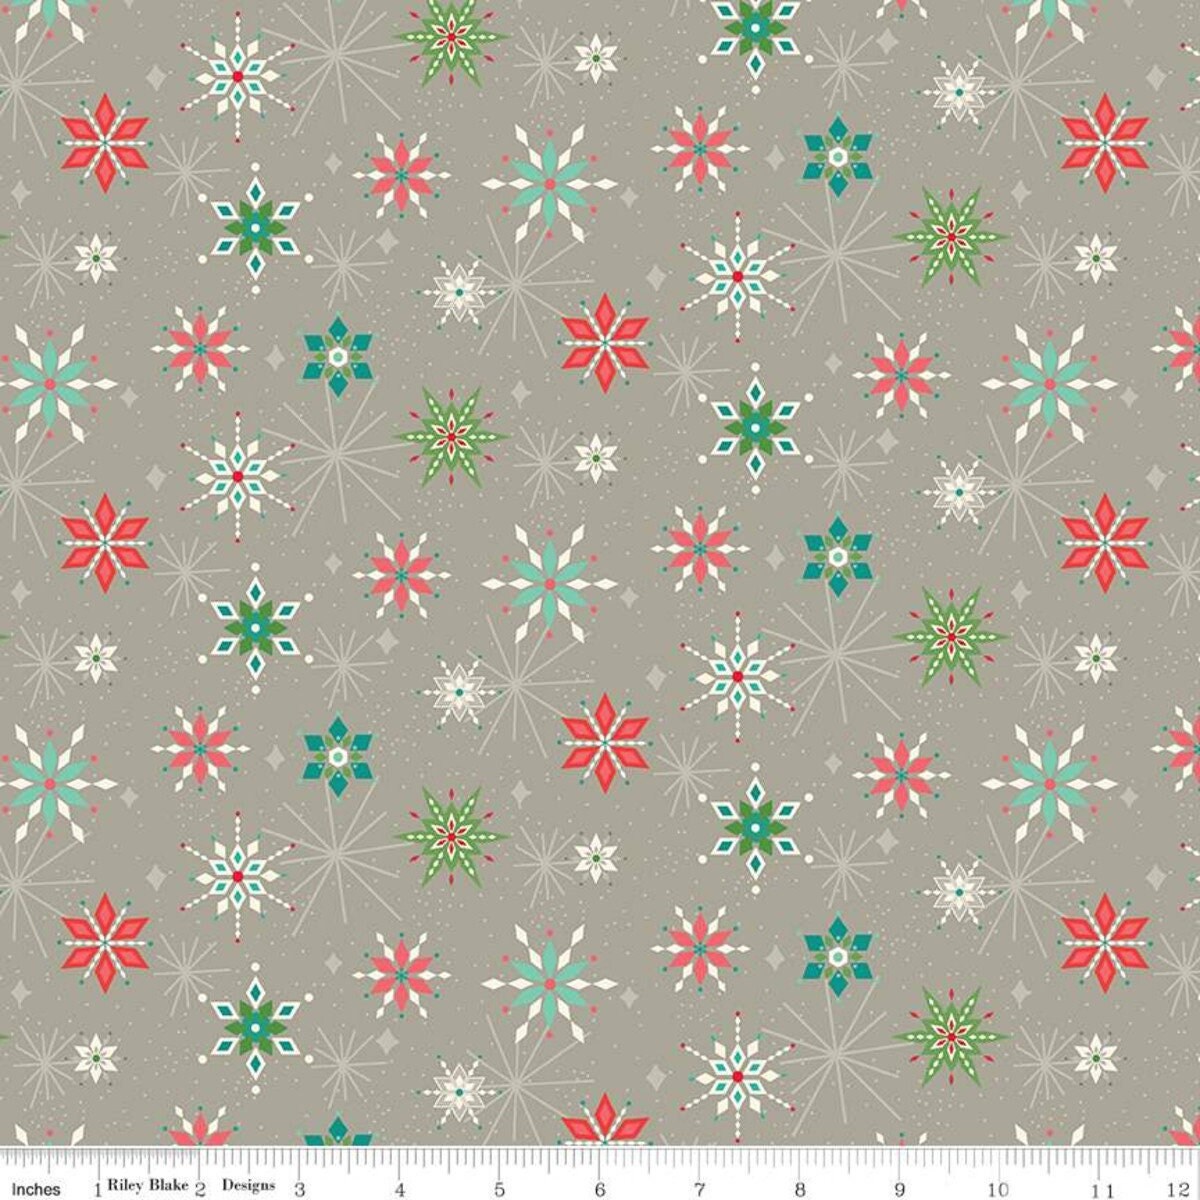 Winter Wonder Snowflakes - LAMINATED Cotton Fabric - Riley Blake